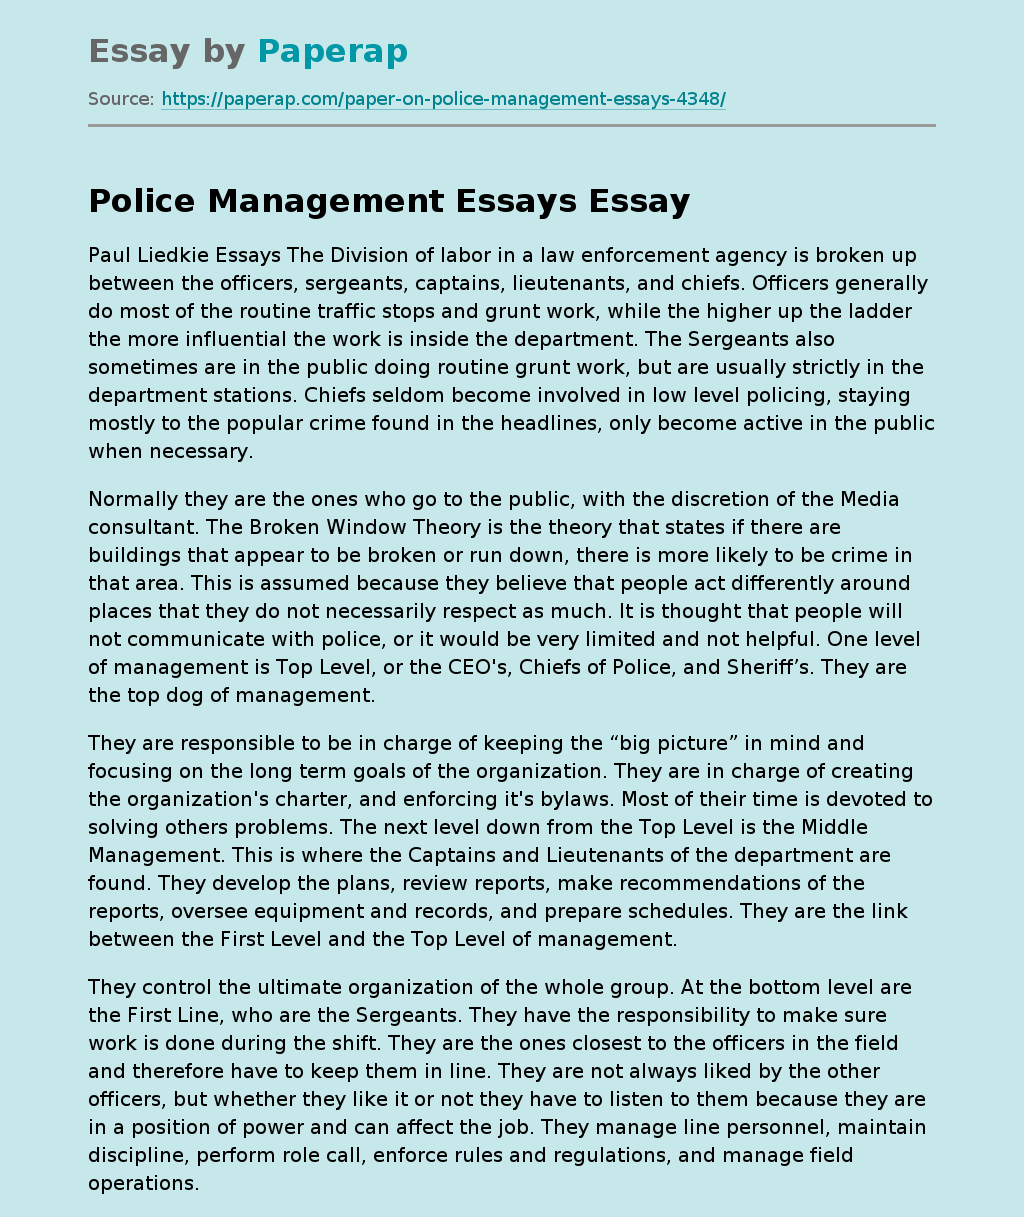 Police Management Essays